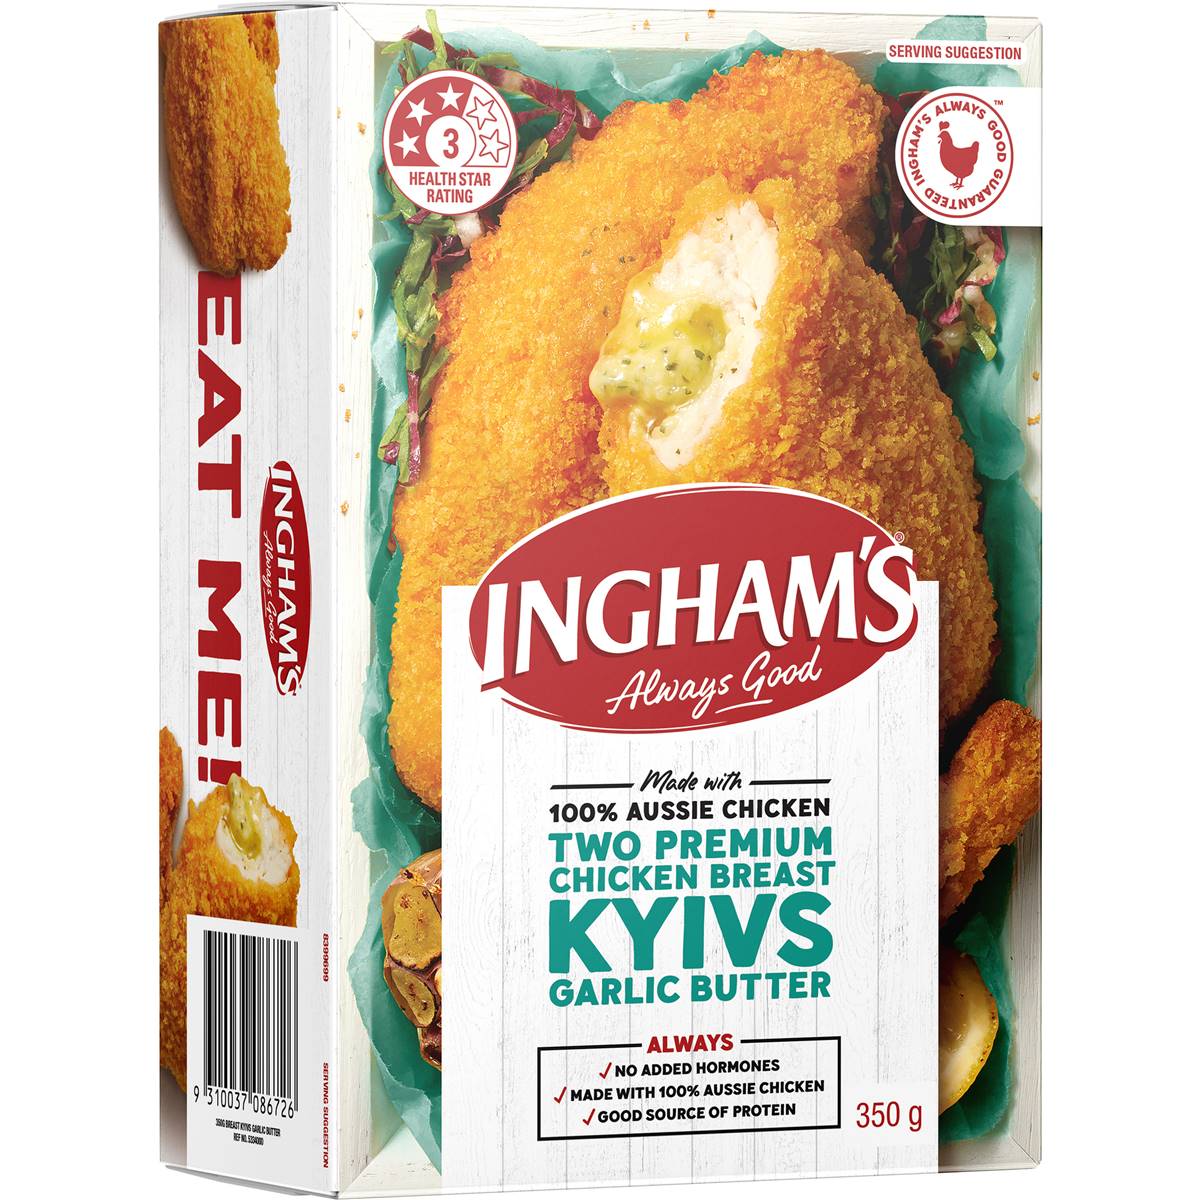 Calories in Ingham's Crumbed Chicken Kiev Garlic Butter